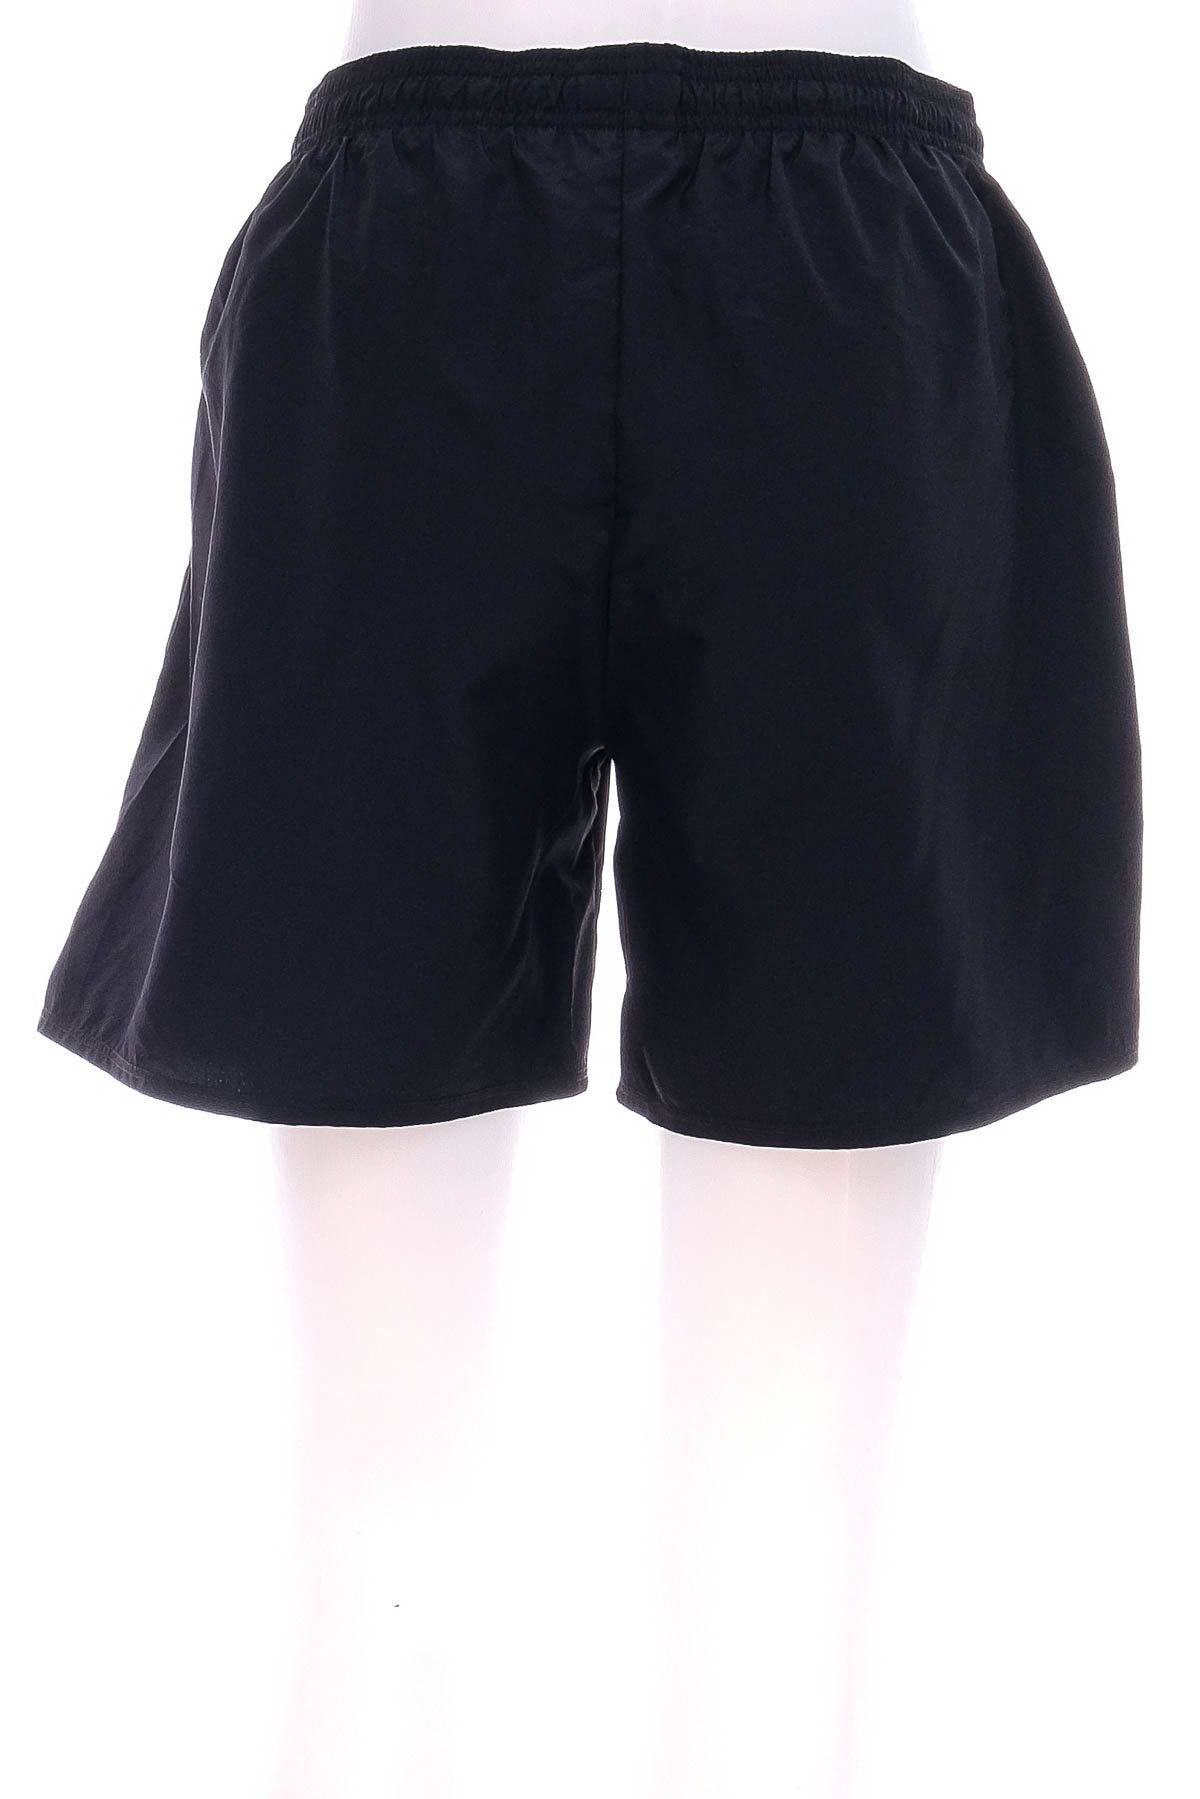 Men's shorts - Odlo - 1